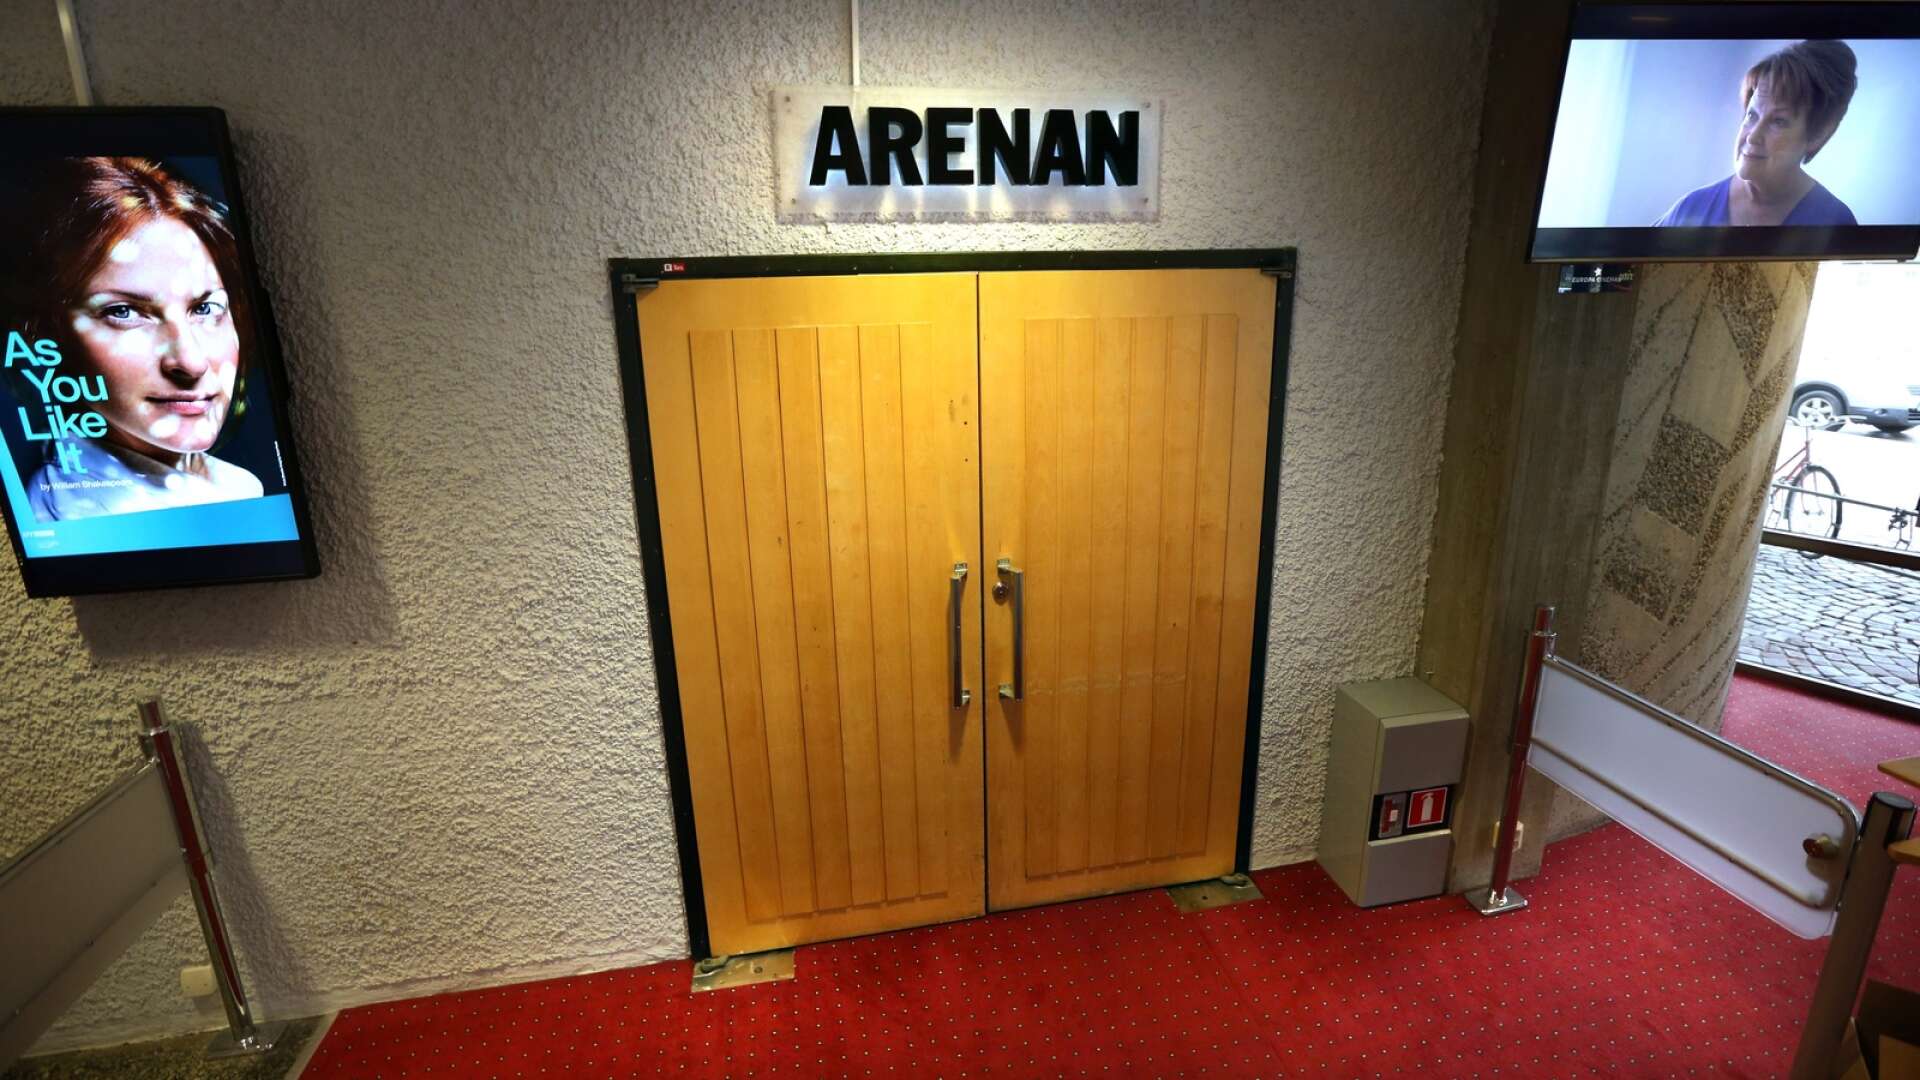 På Arenan i bibliotekshuset i Karlstad visas film regelbundet.